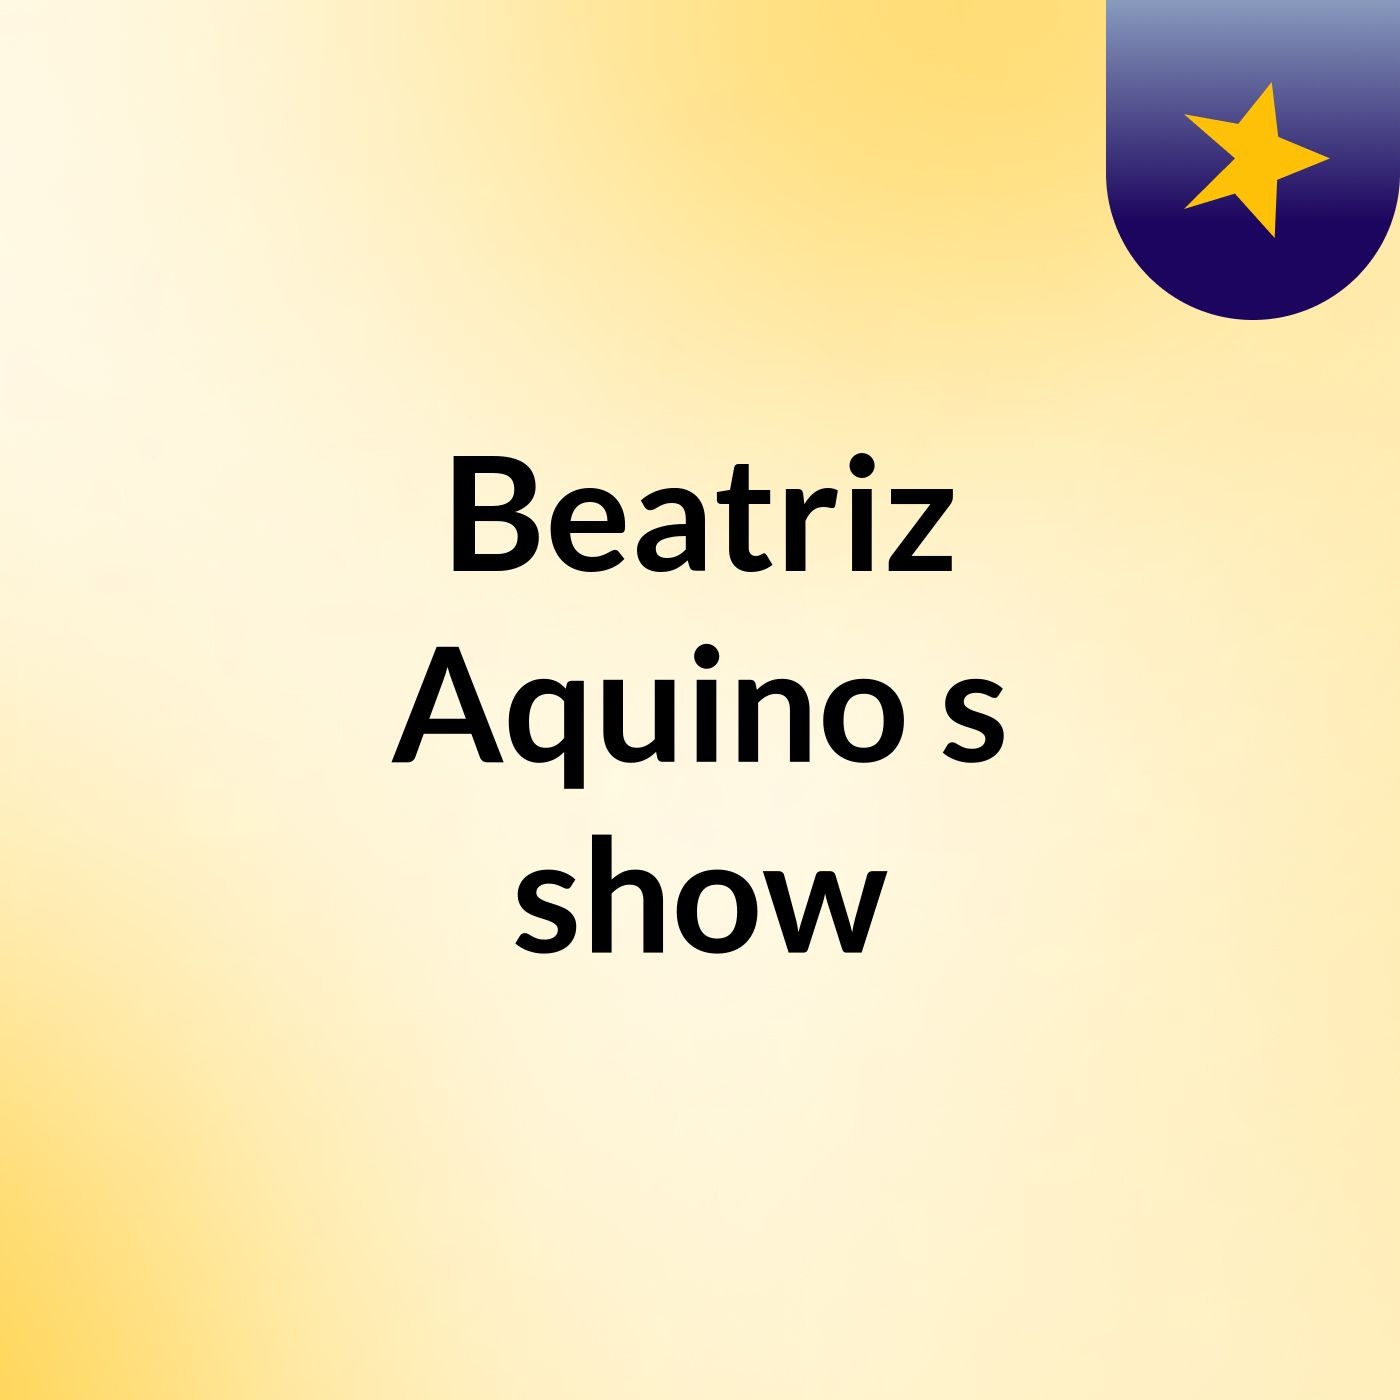 Beatriz Aquino's show